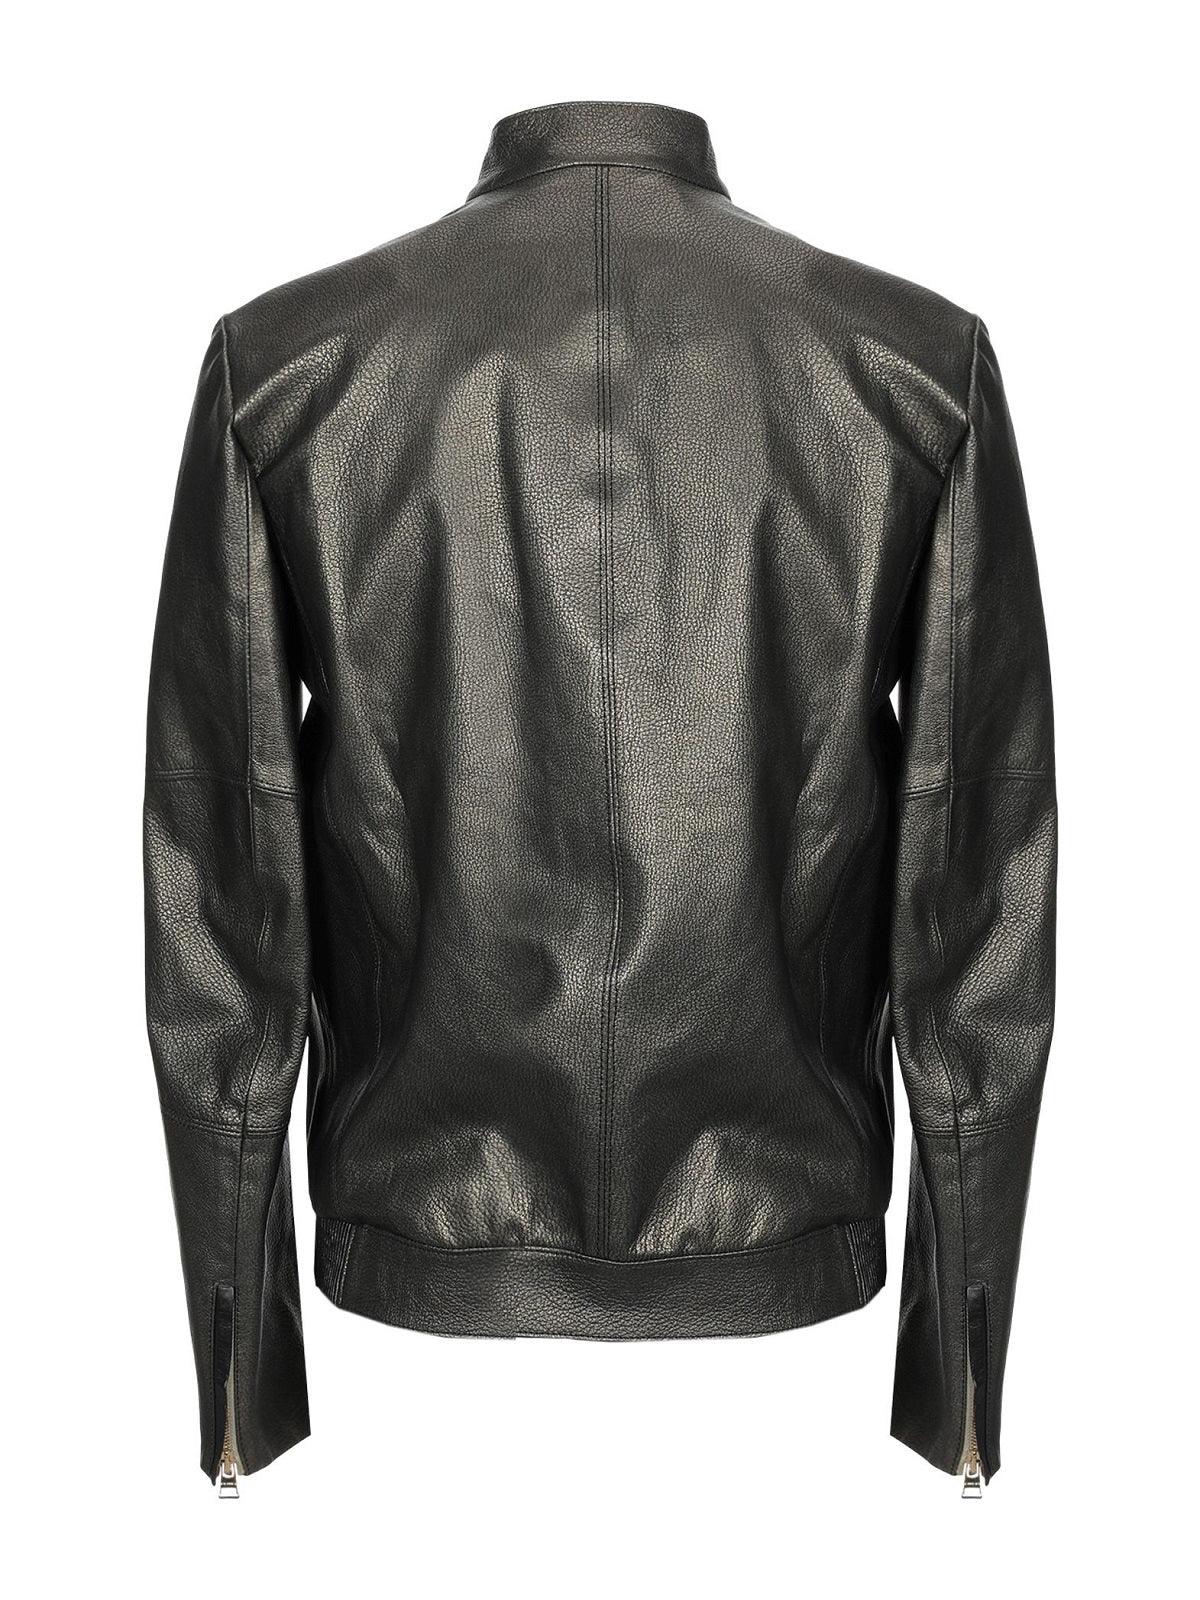 Shinny Jet Black Leather Jacket For Men - shearlingbomberjackets